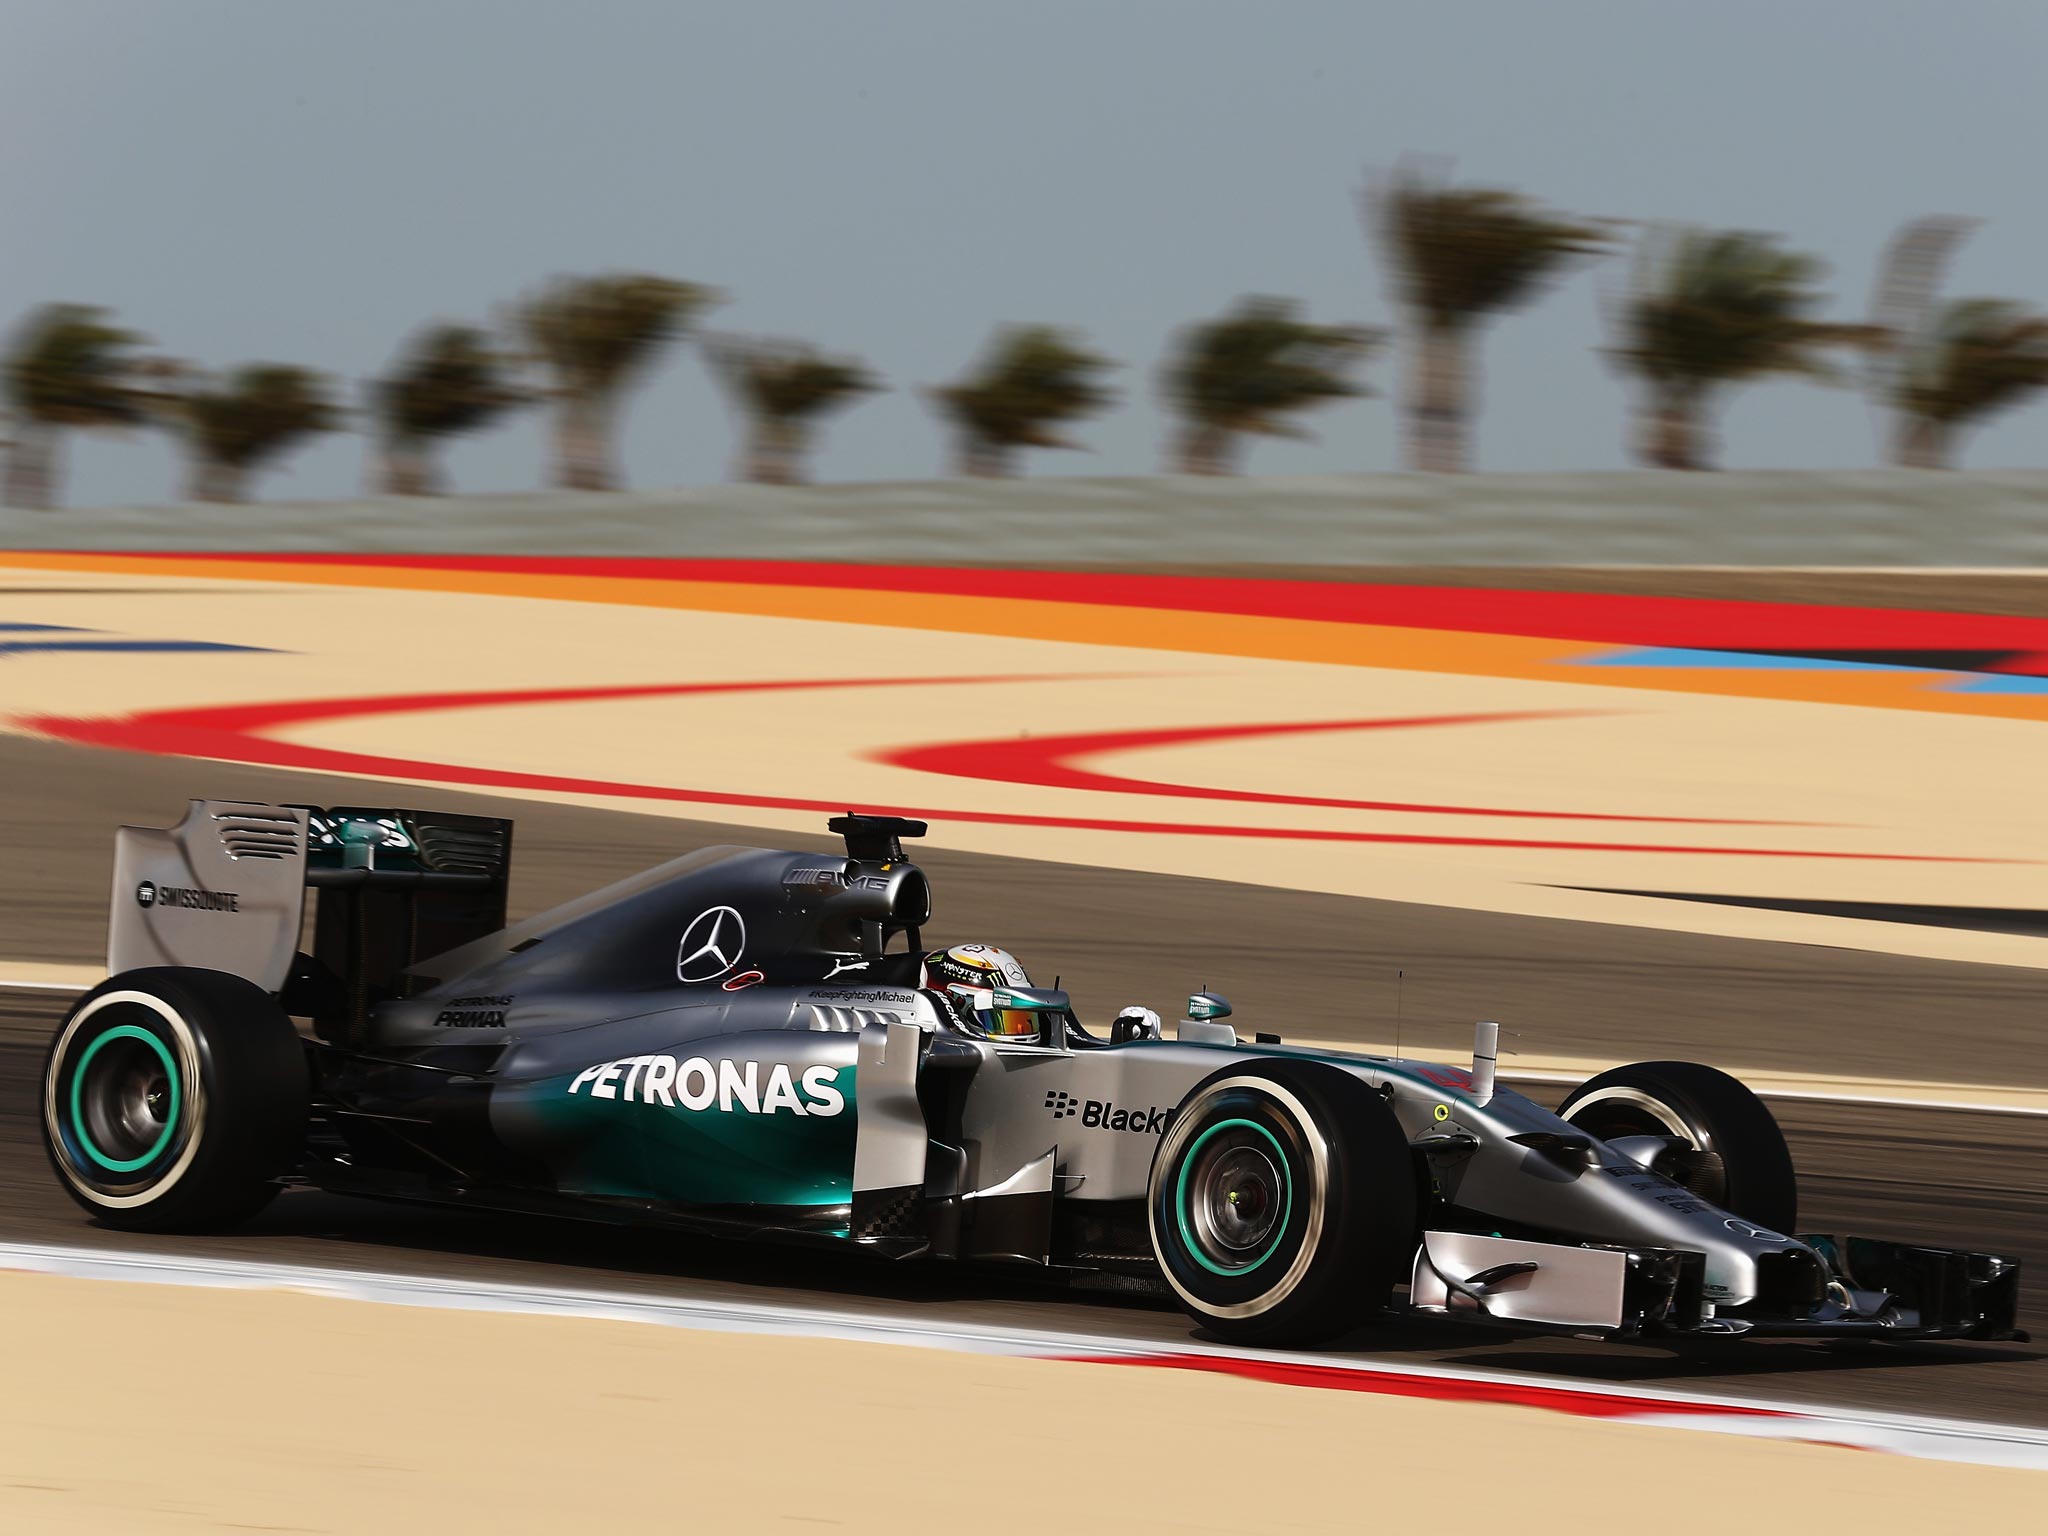 Lewis Hamilton on a practice run at the Bahrain International
Circuit yesterday